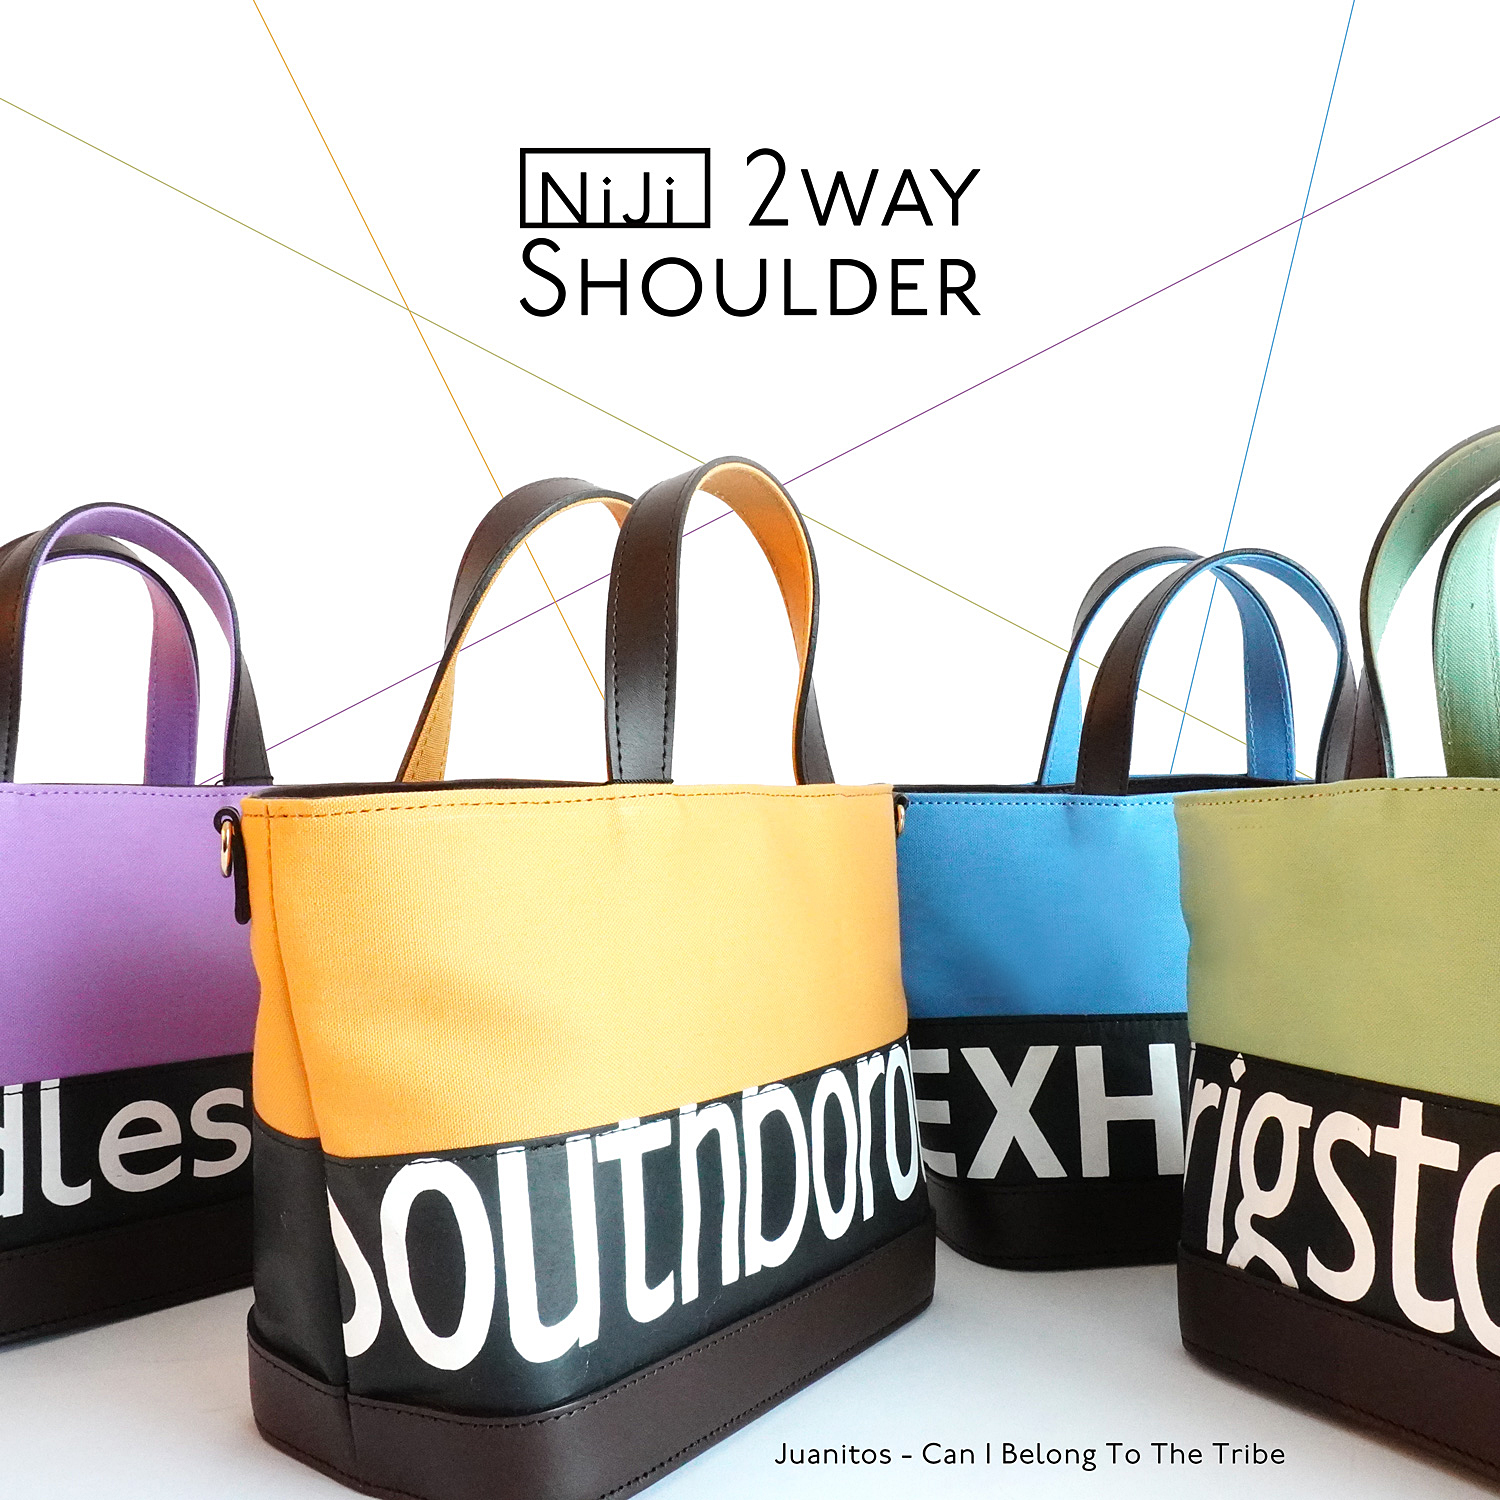 New Items “NiJi 2way Shoulder”